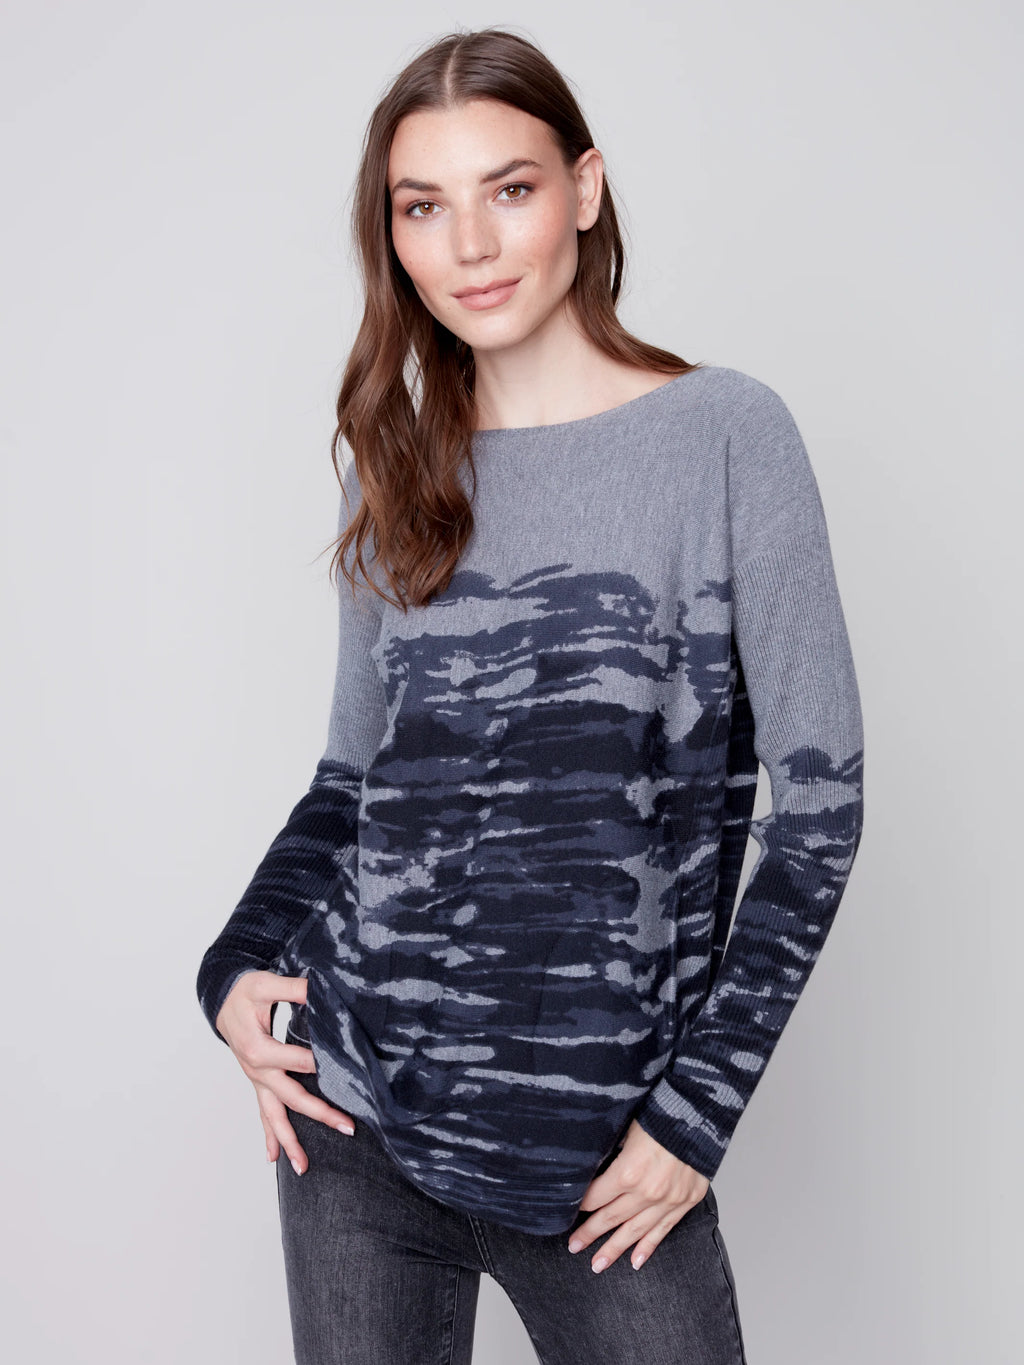 Charlie B Printed Plushy Knit Sweater - Charcoal